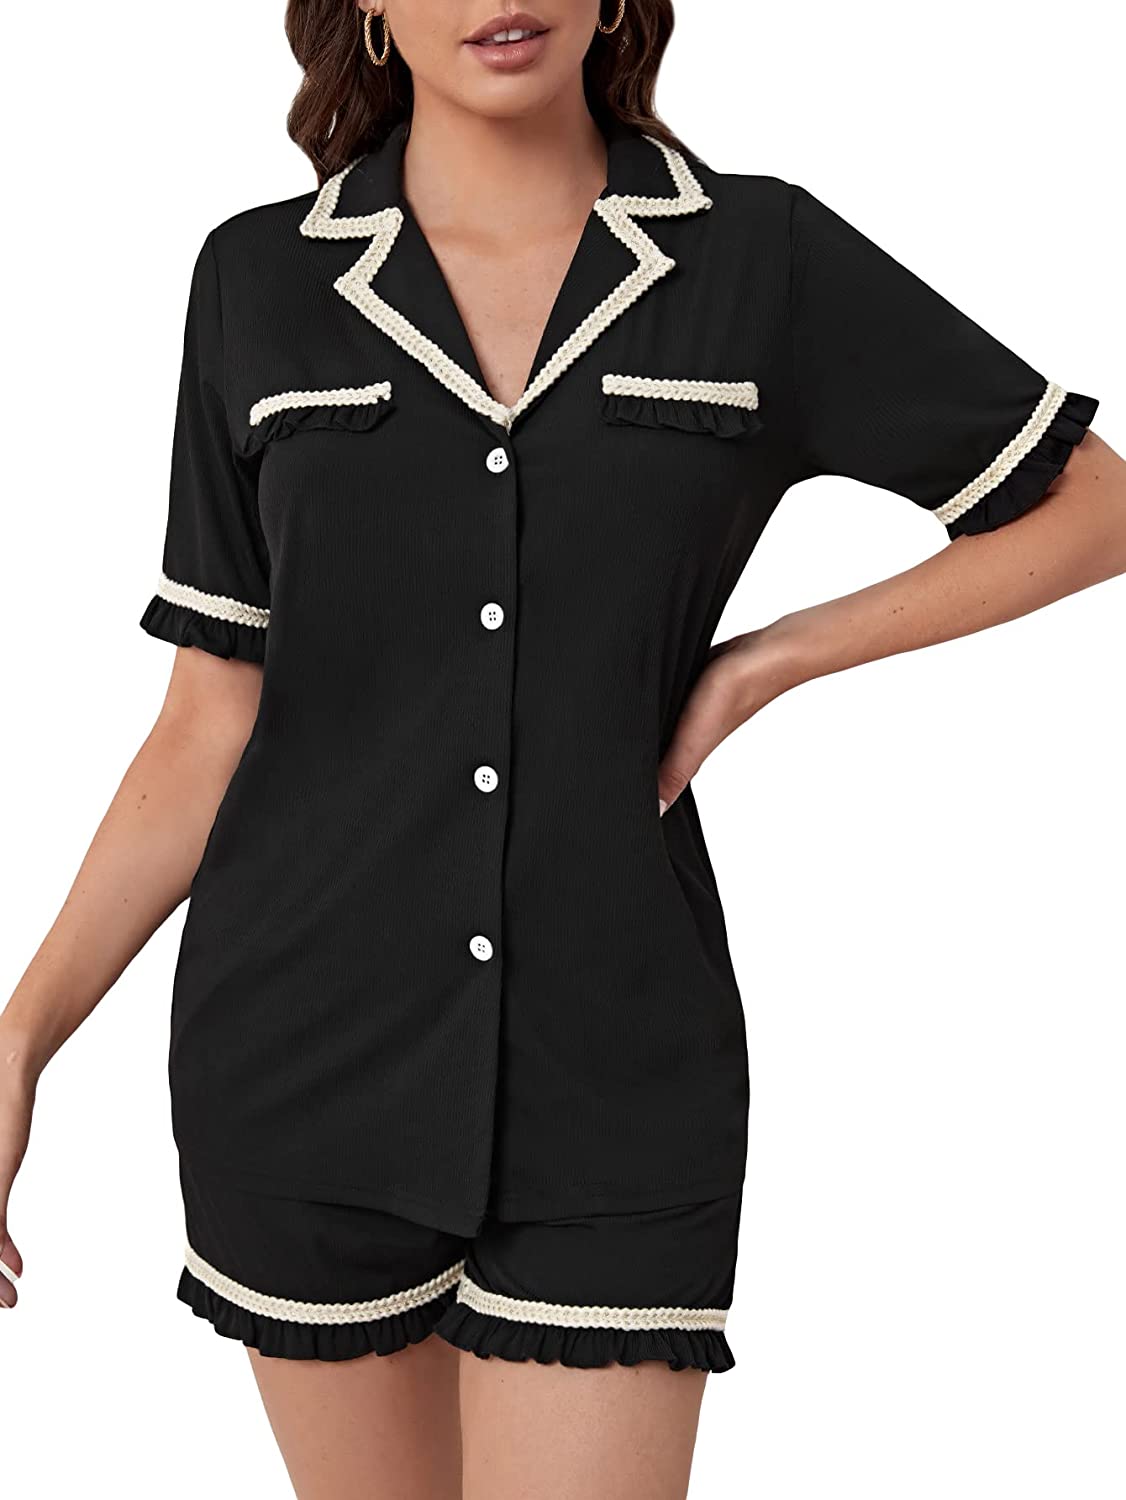 WDIRARA Women's 2 Piece Sleepwear Striped Satin Short Sleeve Shirt